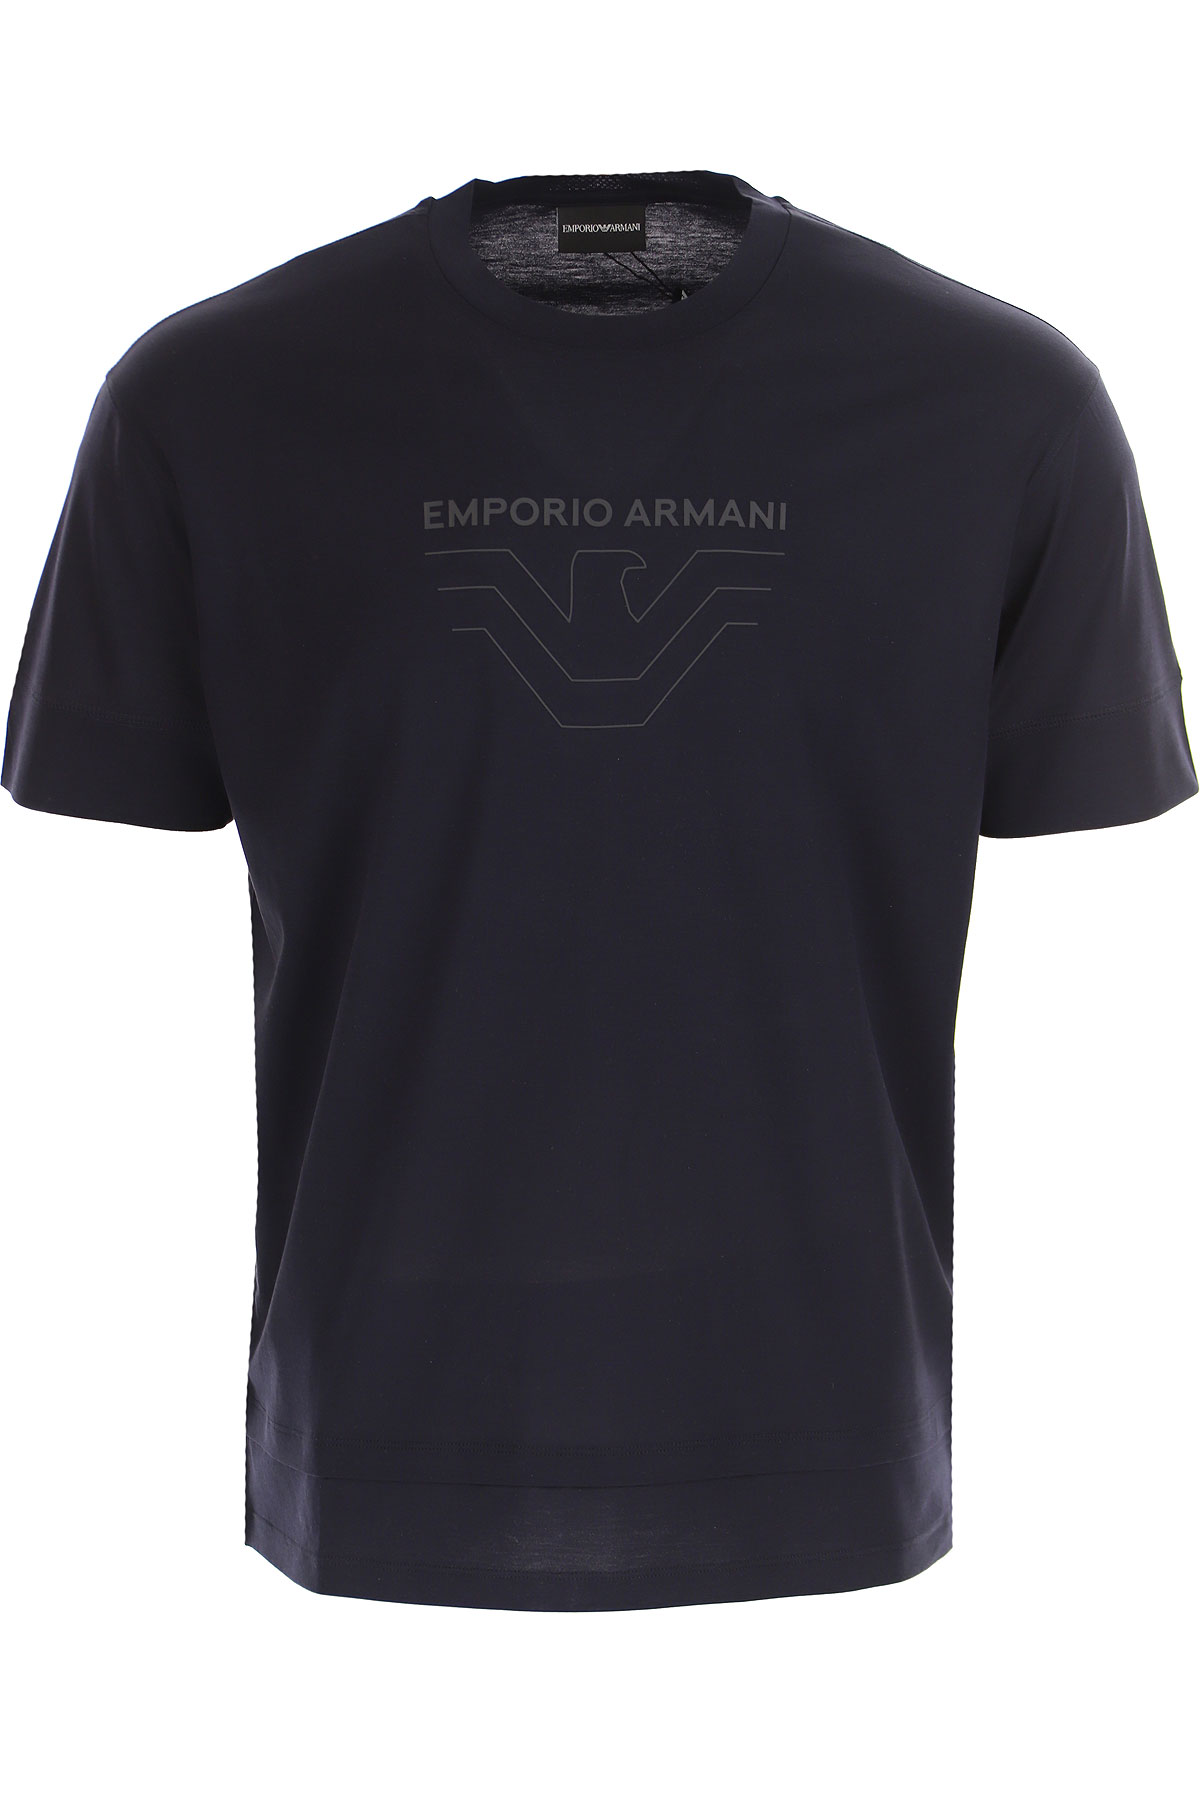 Mens Clothing Emporio Armani, Style code: 3k1tf8-1juvz-0920